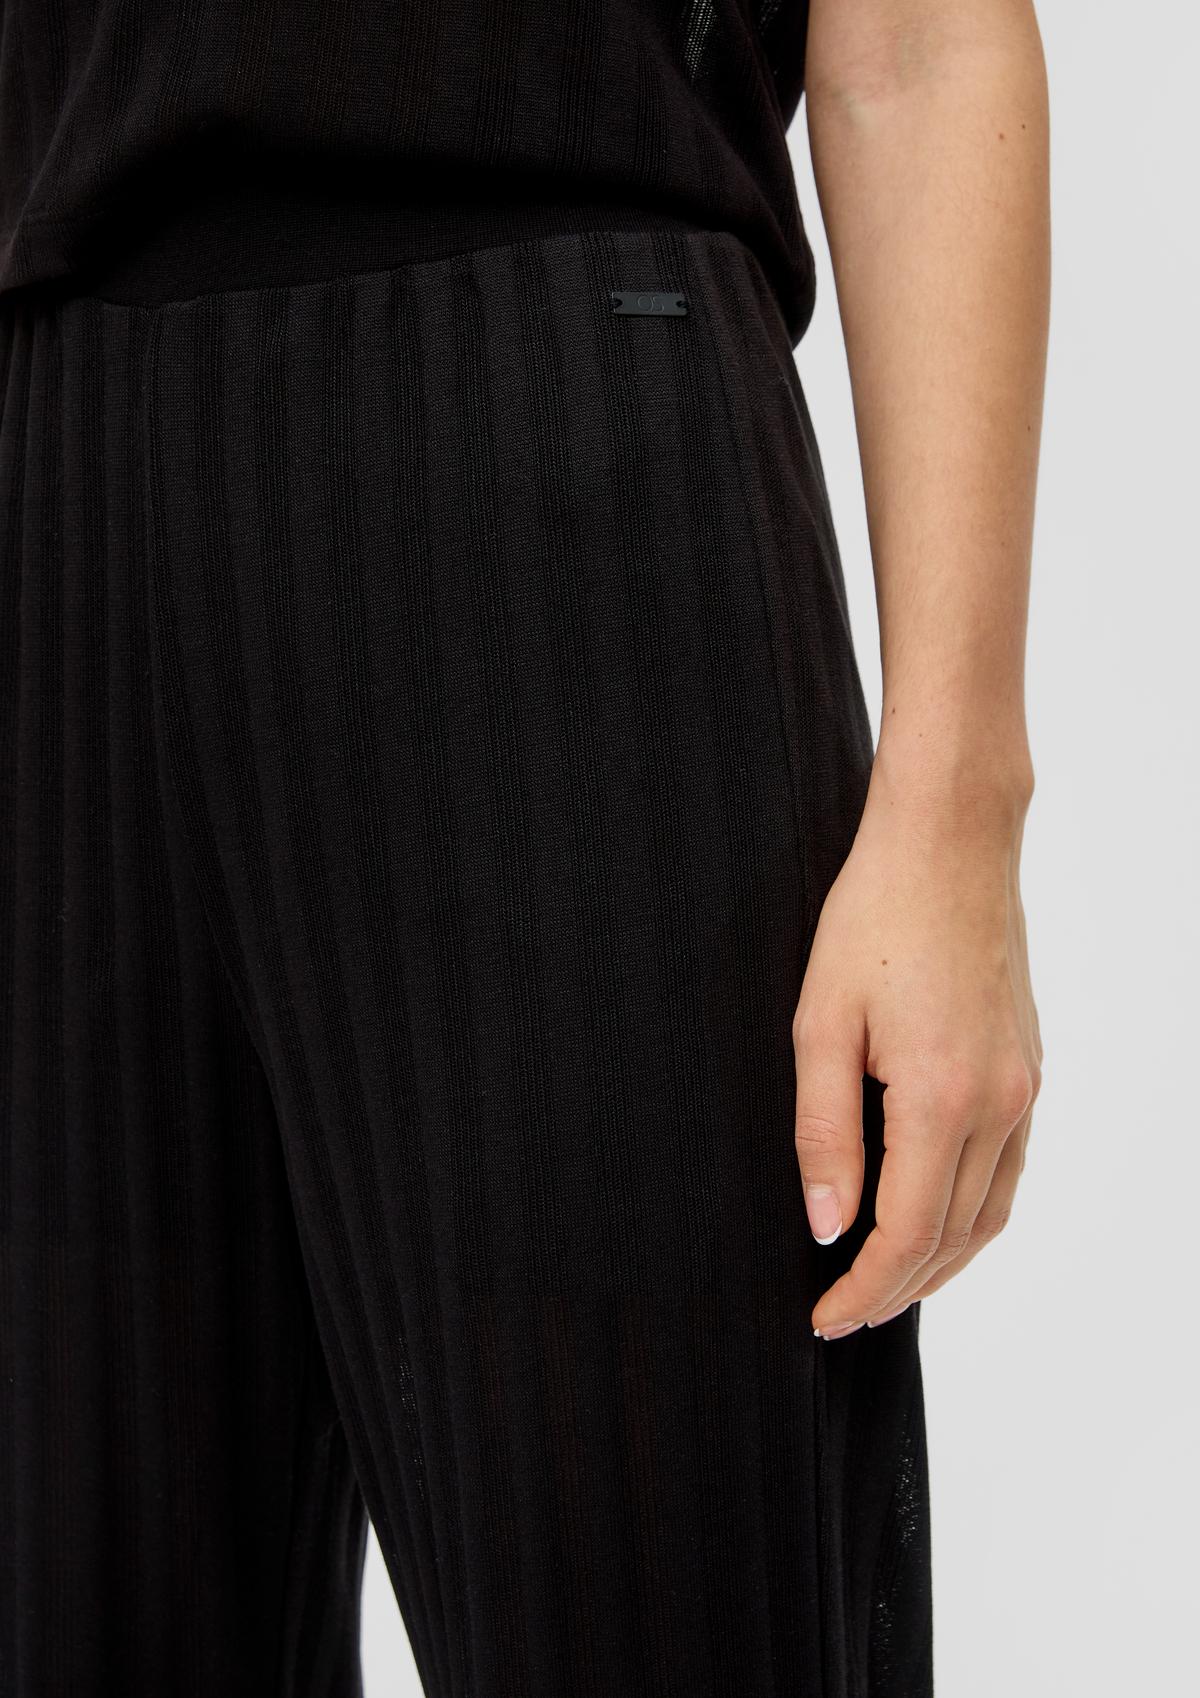 s.Oliver Regular : pantalon semi-transparent à motif texturé